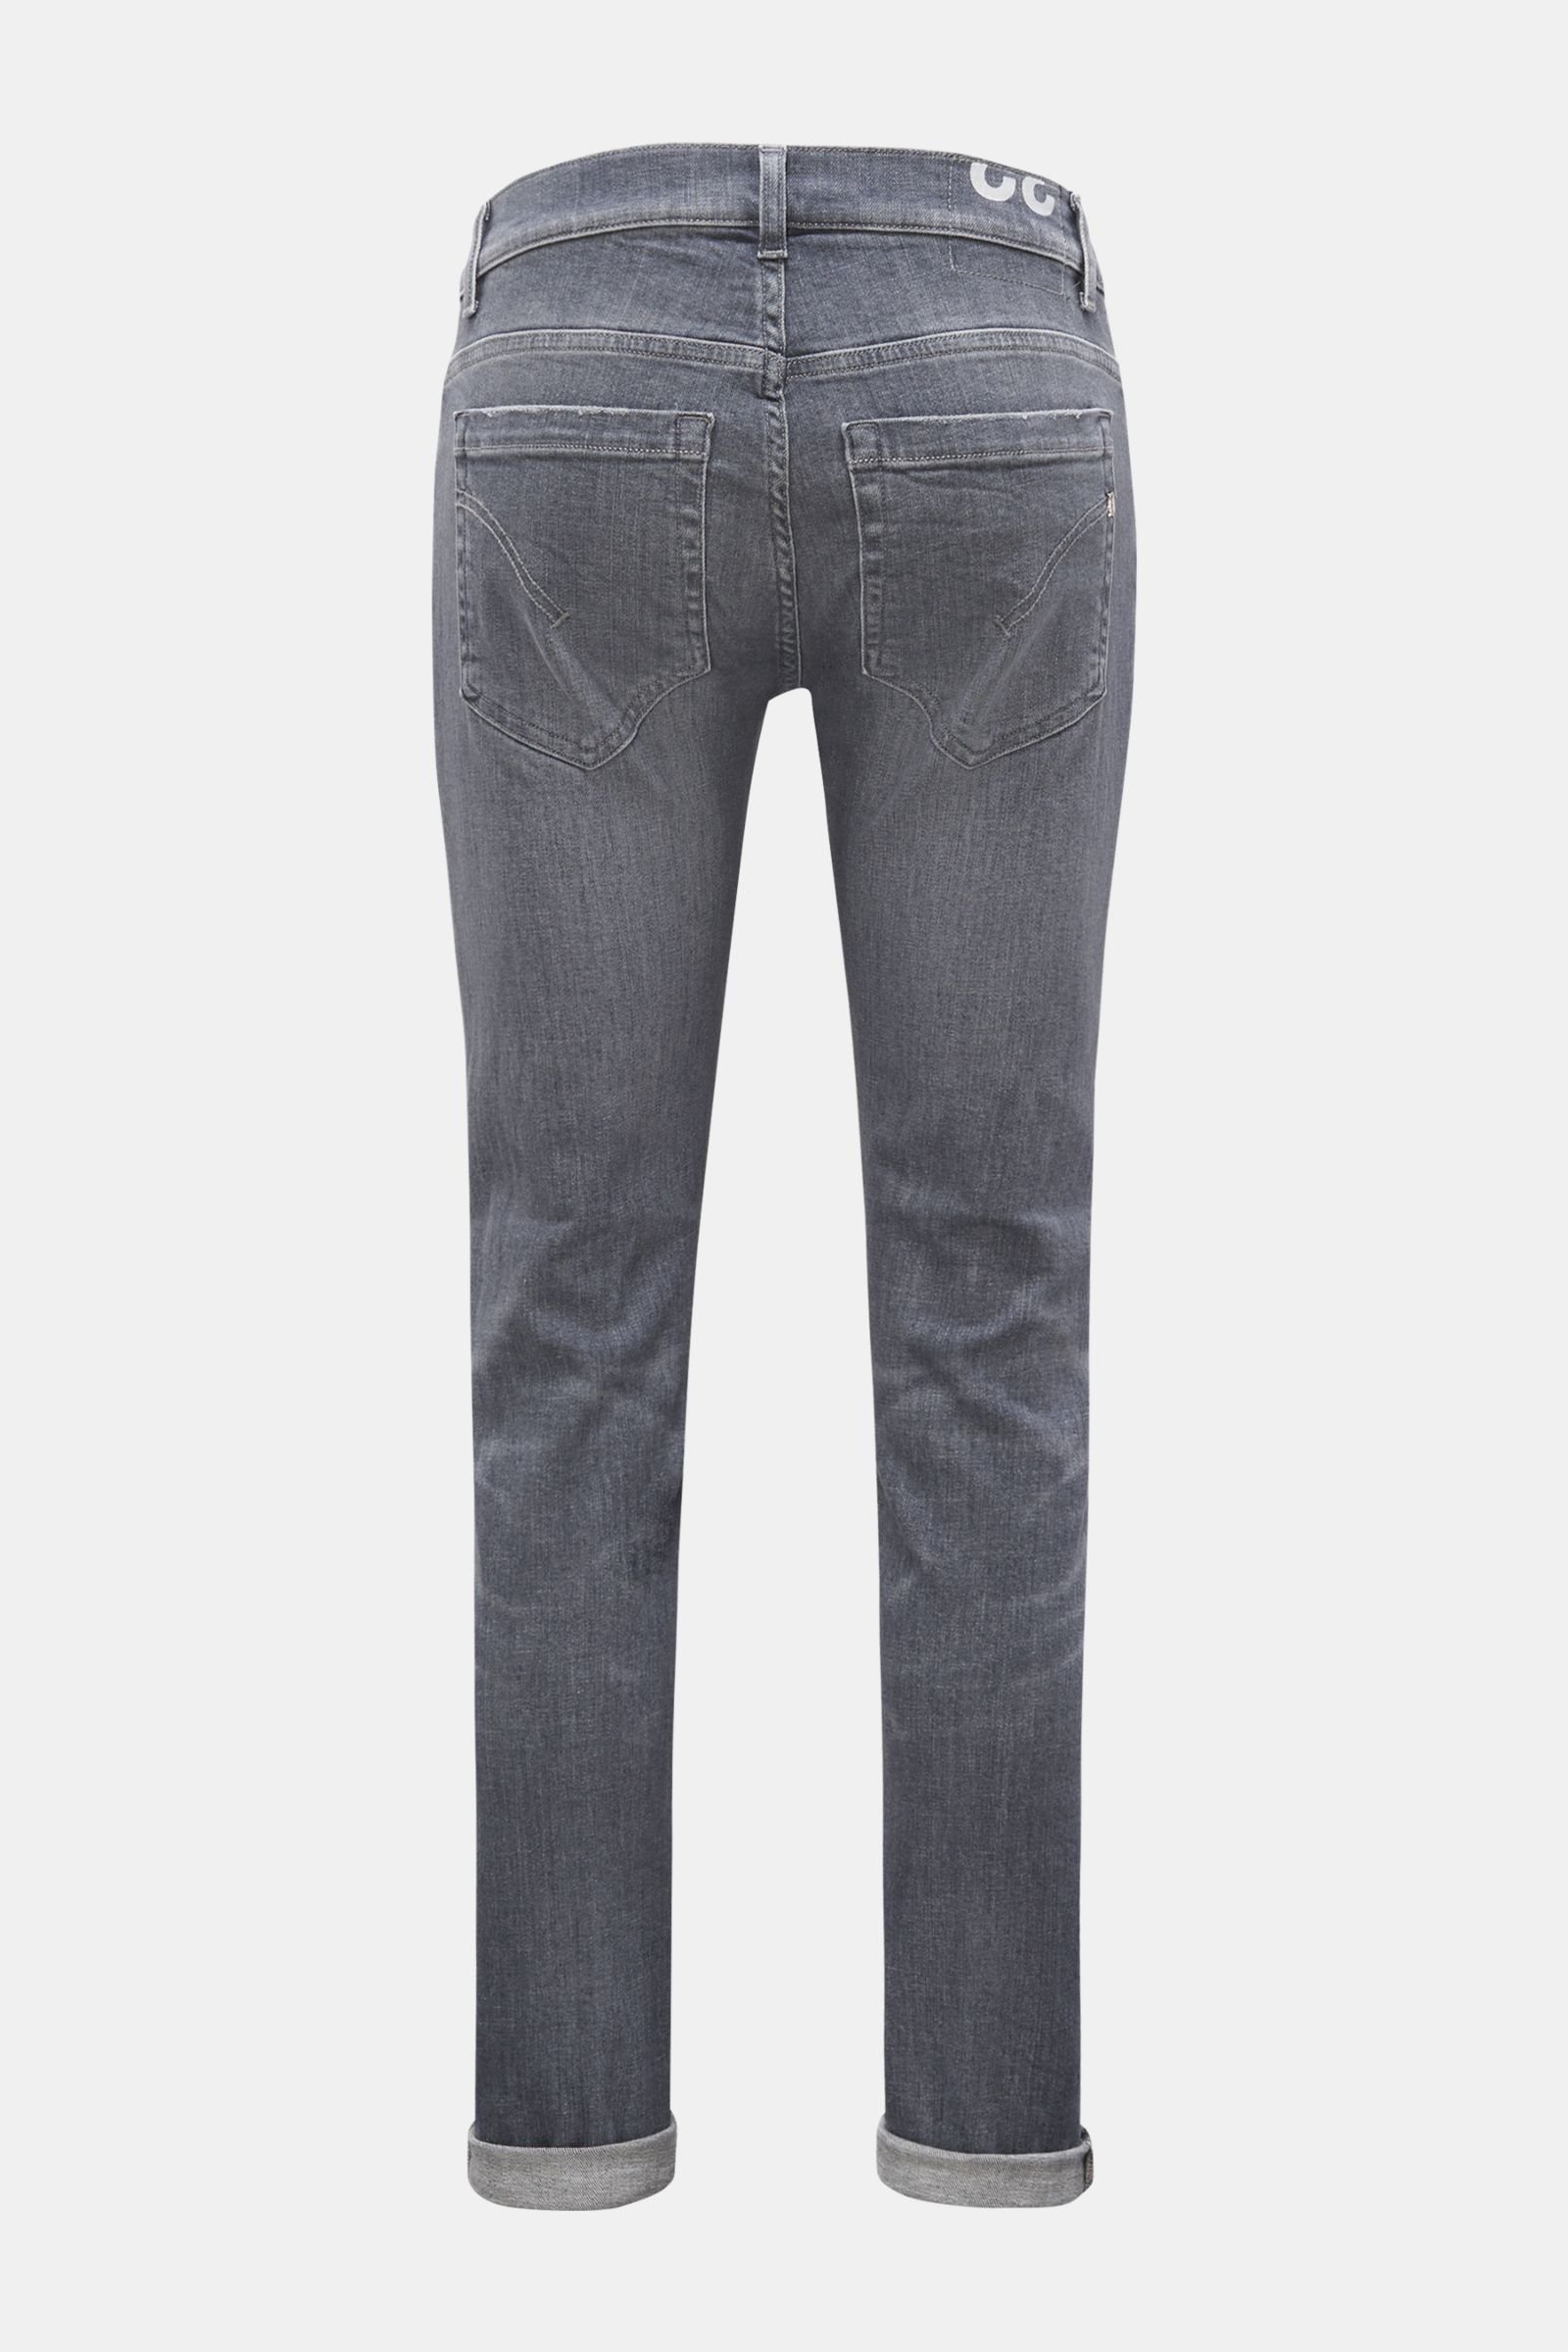 DONDUP jeans 'George Skinny Fit' grey | BRAUN Hamburg